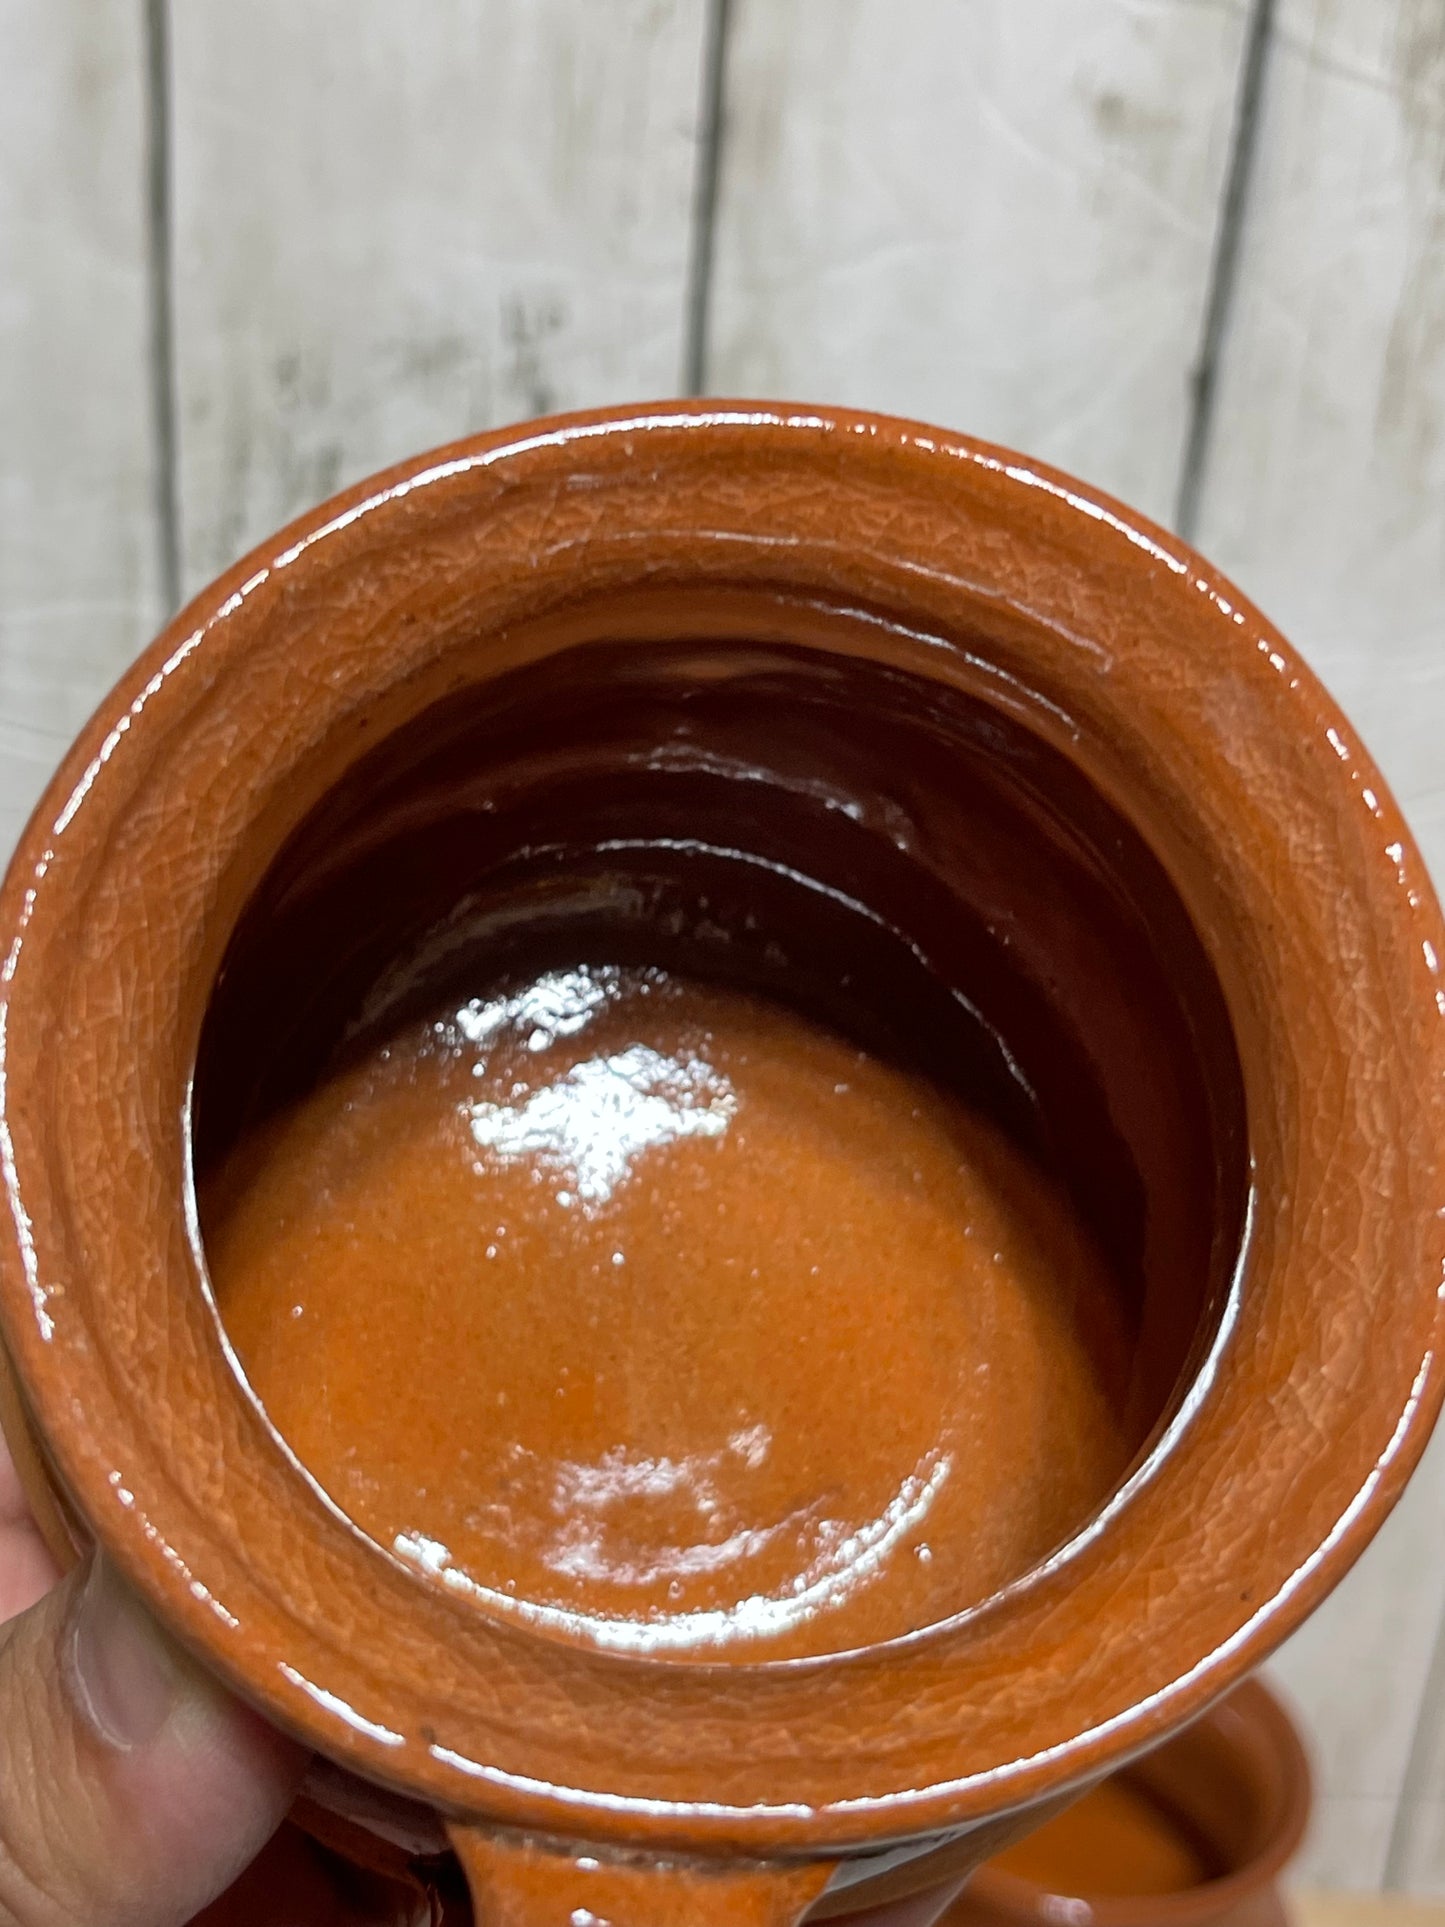 Puebla pottery/Jarrito de barro cafetero/colored terracotta coffee mug